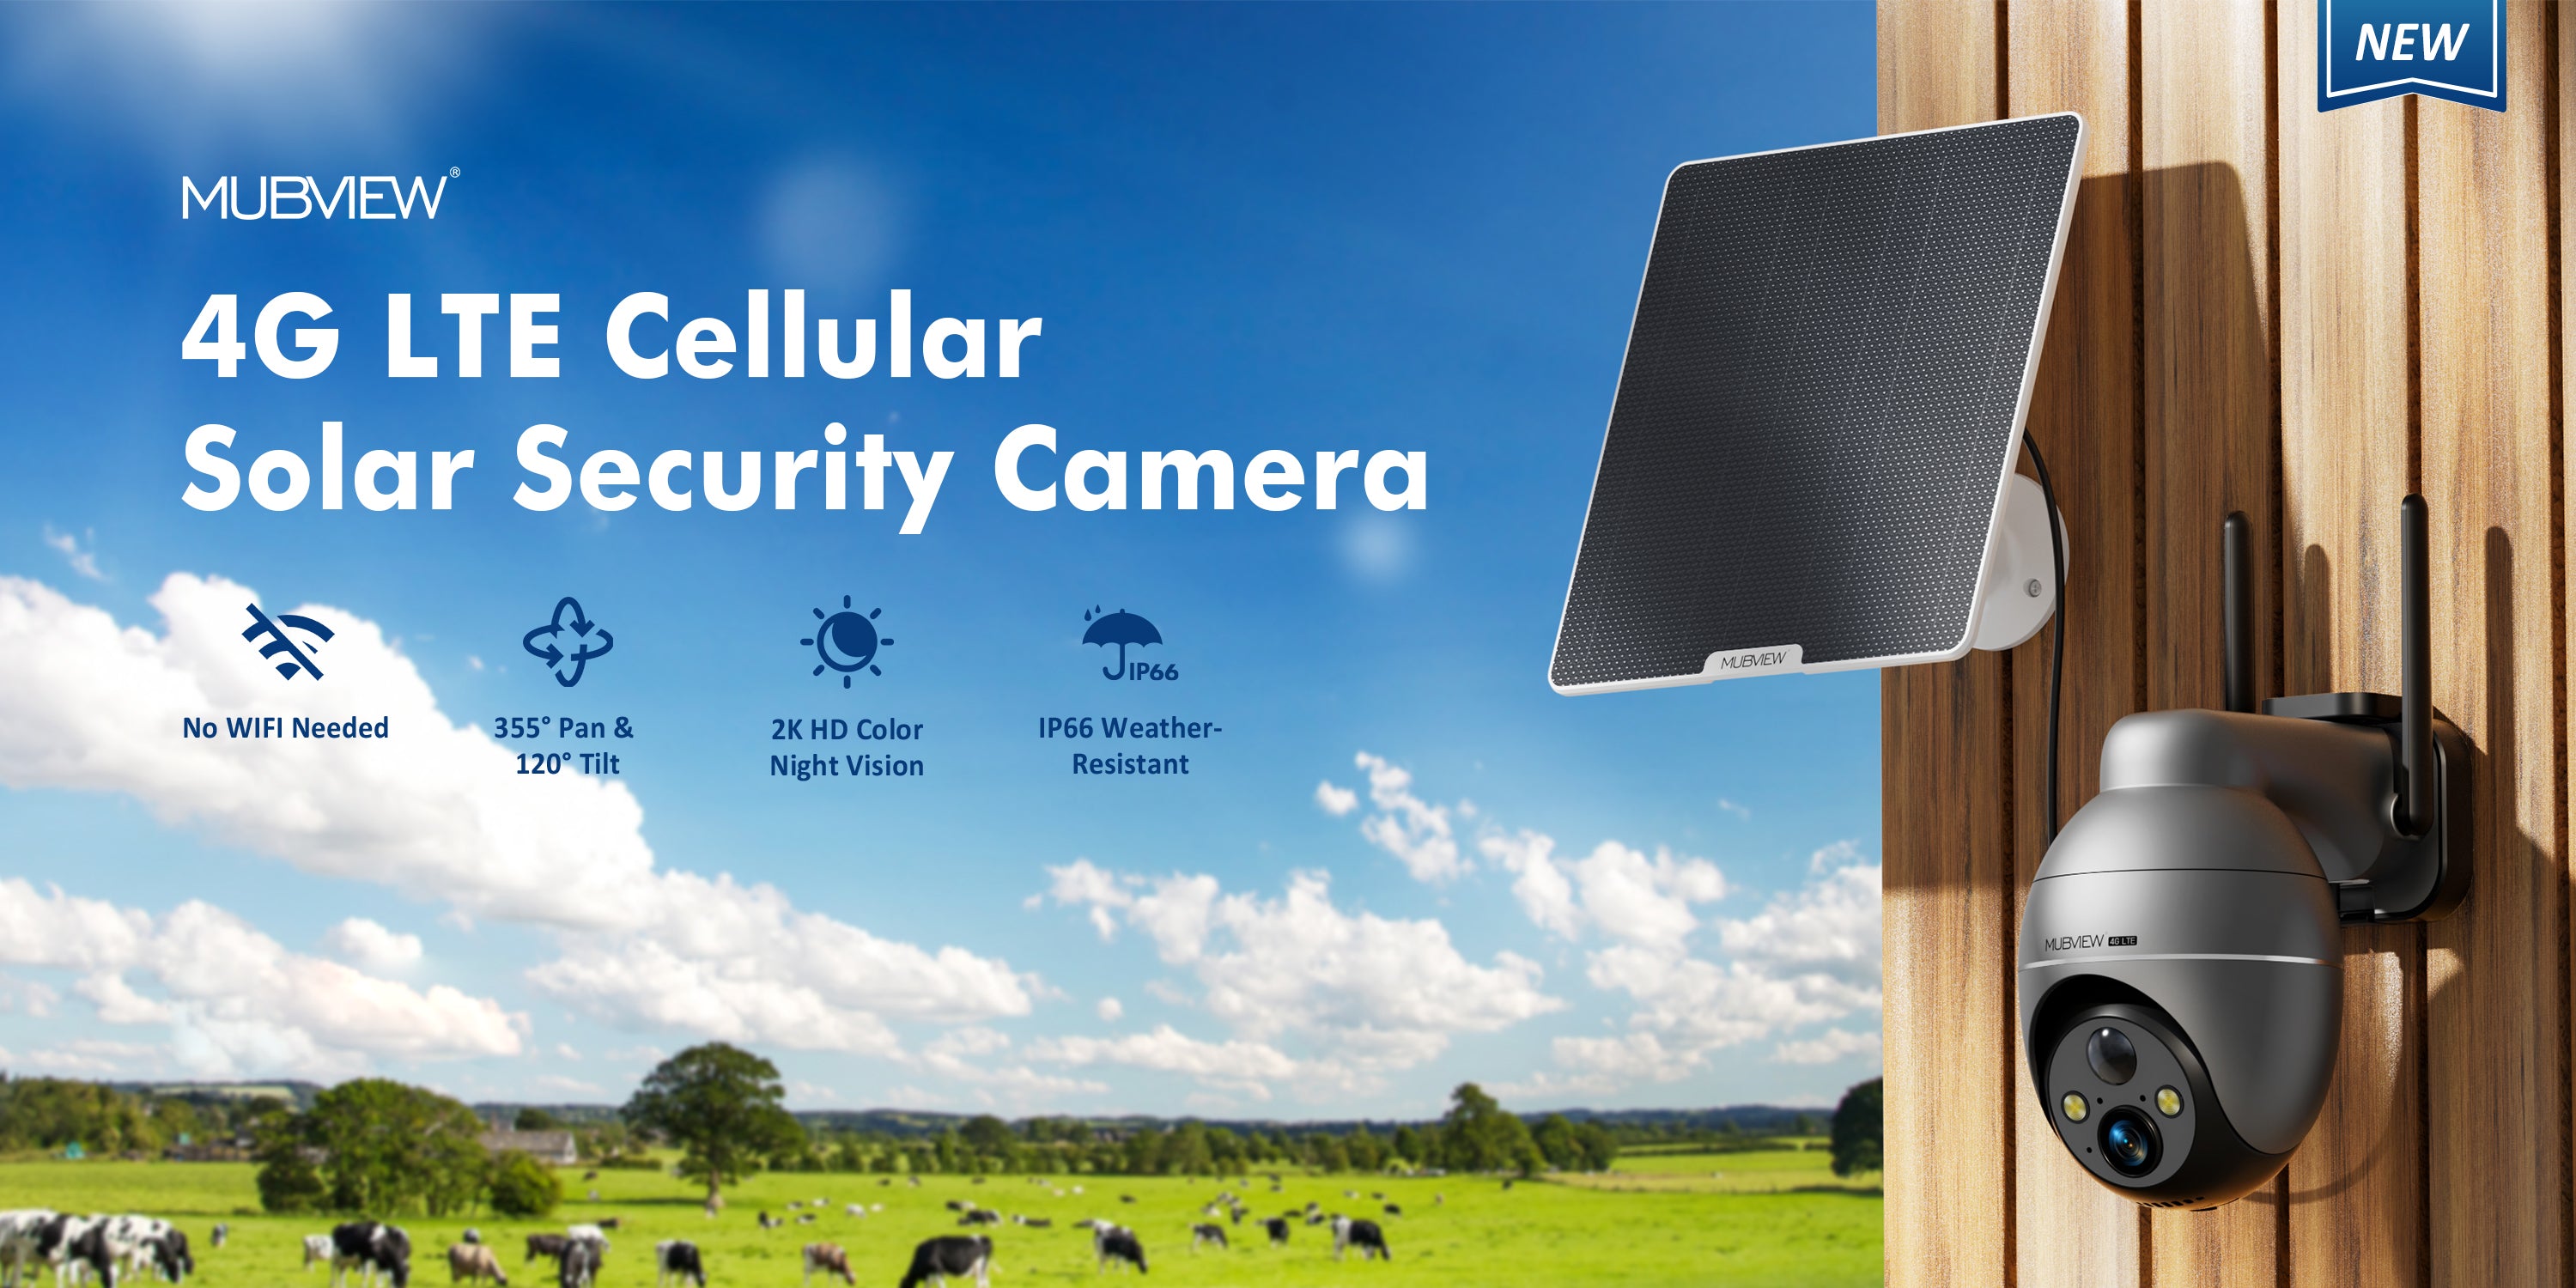 MUBVIEW 4G LTE Cellular Security Camera